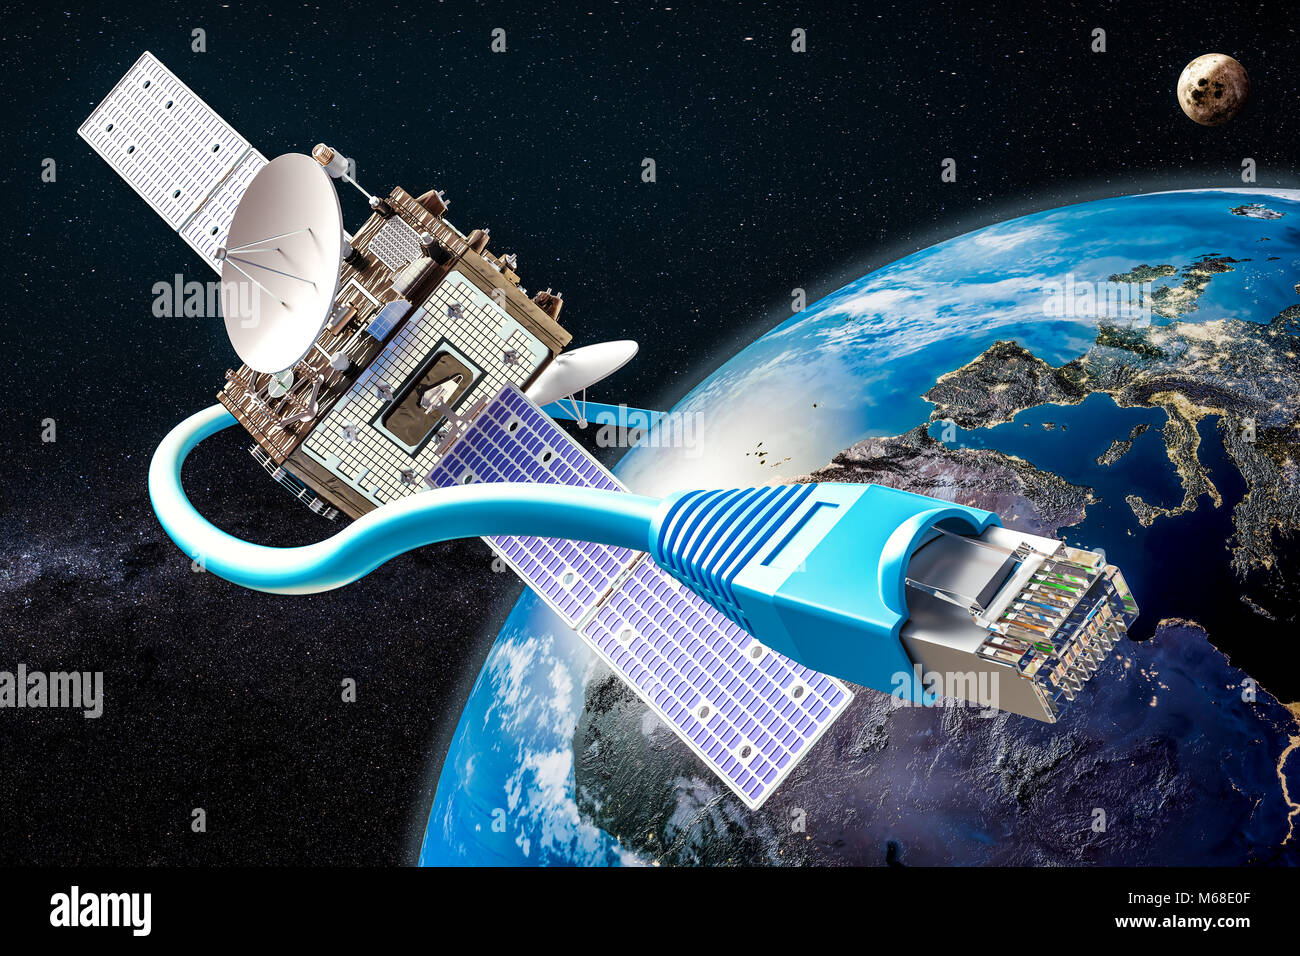 Internet satelital fotografías e imágenes de alta resolución - Alamy